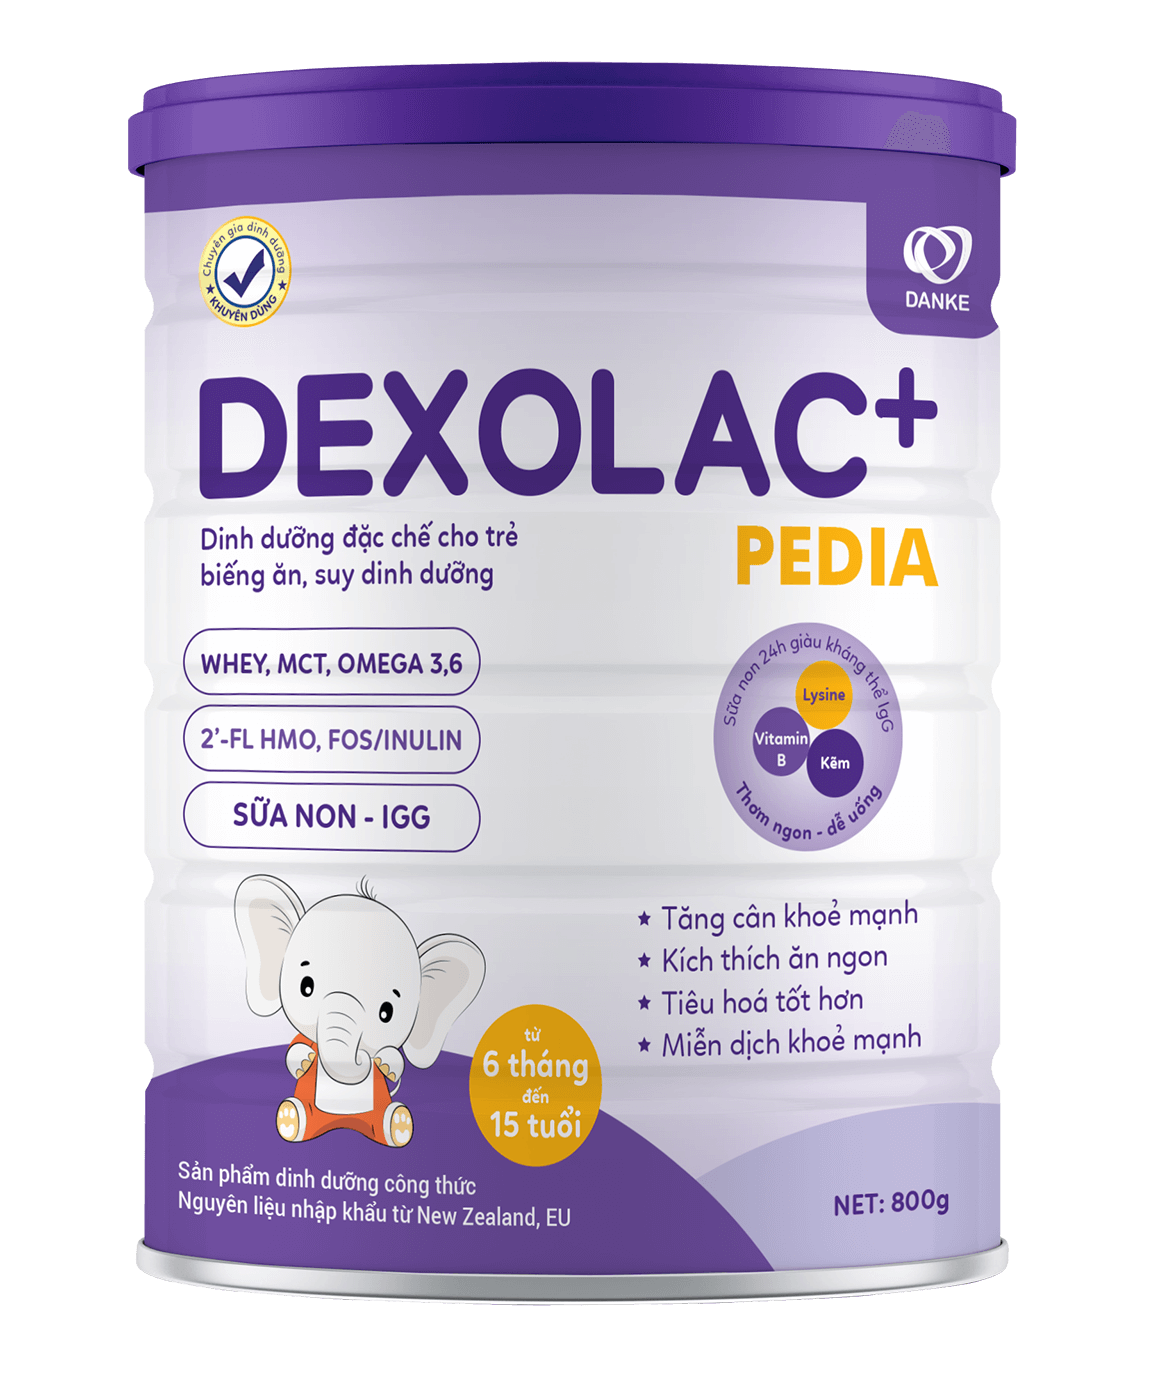 Sữa Dexolac+ Pedia